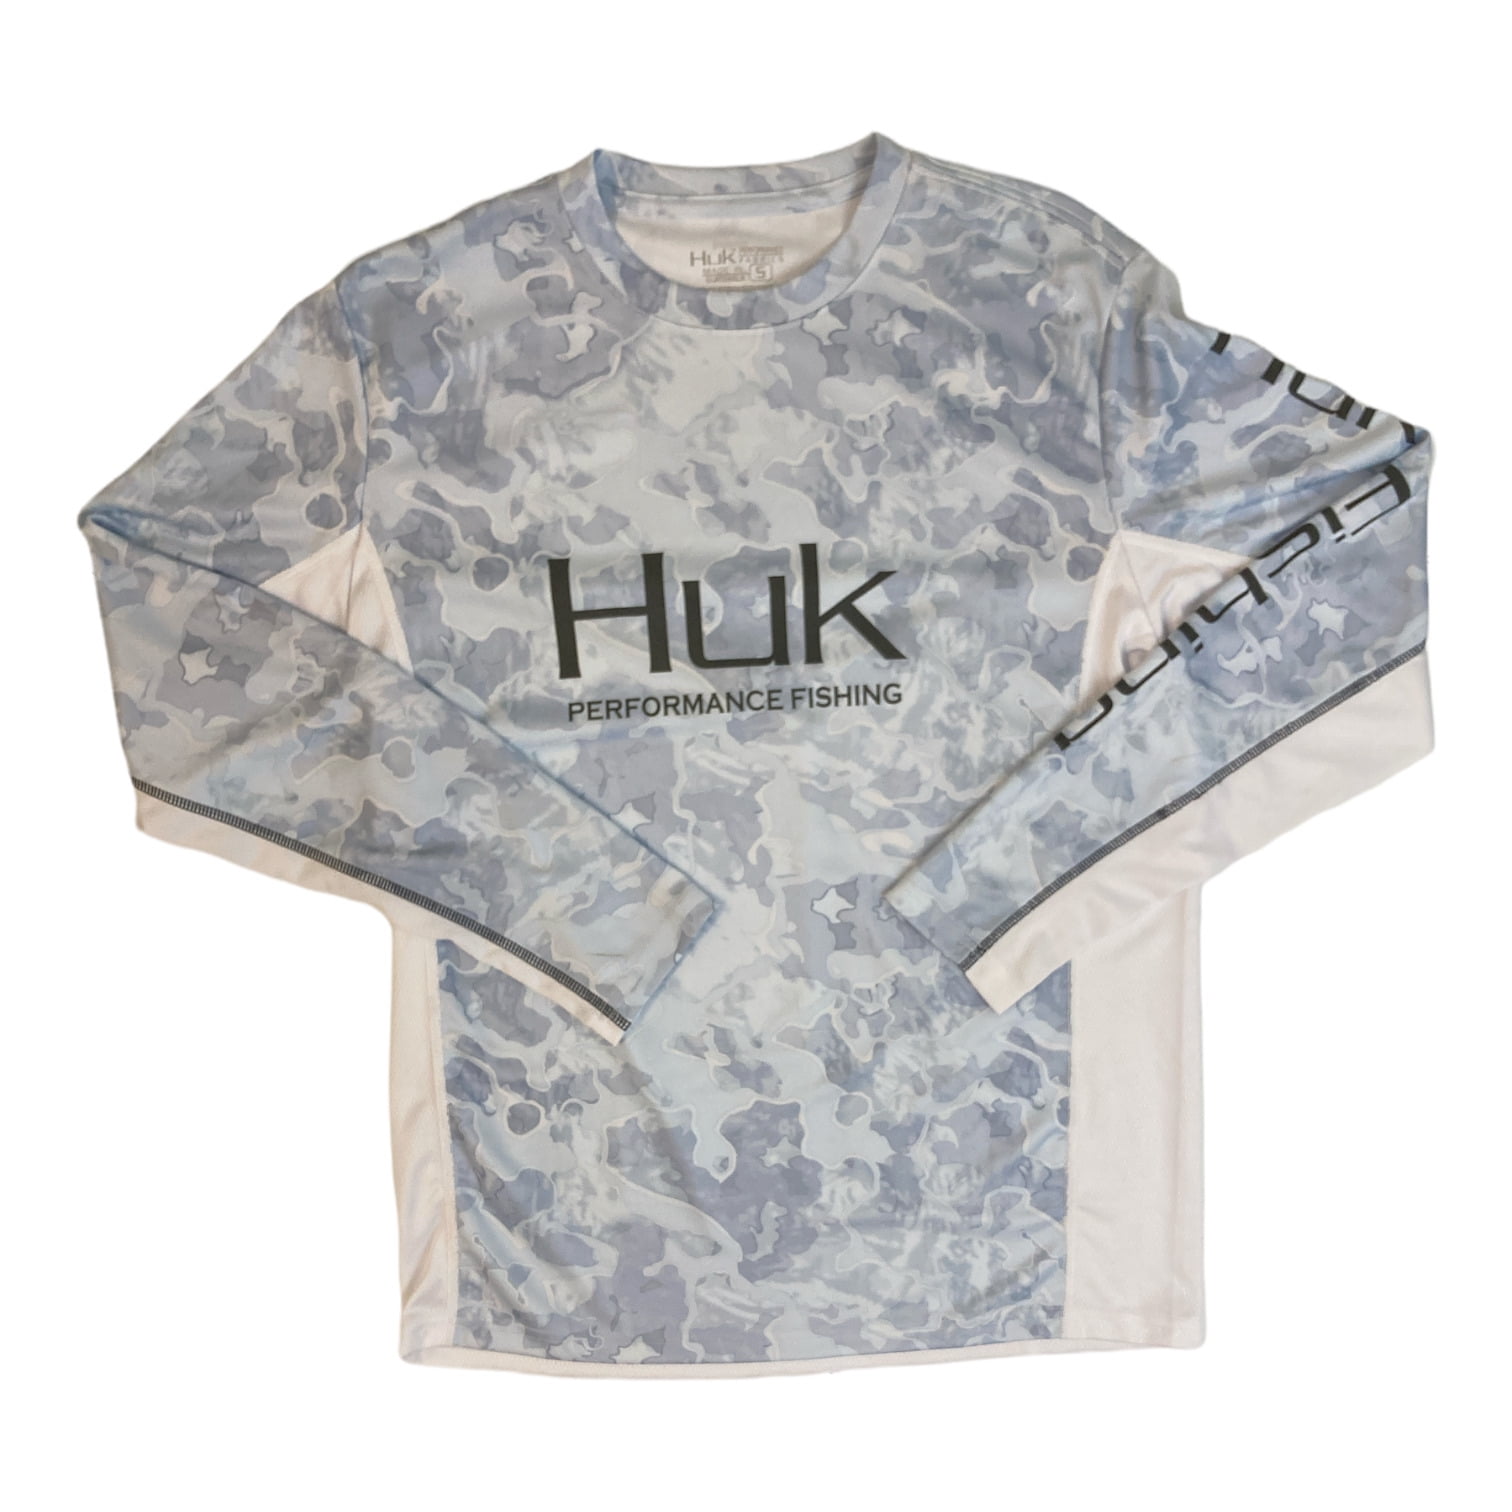 Huk Men's Icon X Performance Long Sleeve Fishing Shirt (Refraction Camo, M)  